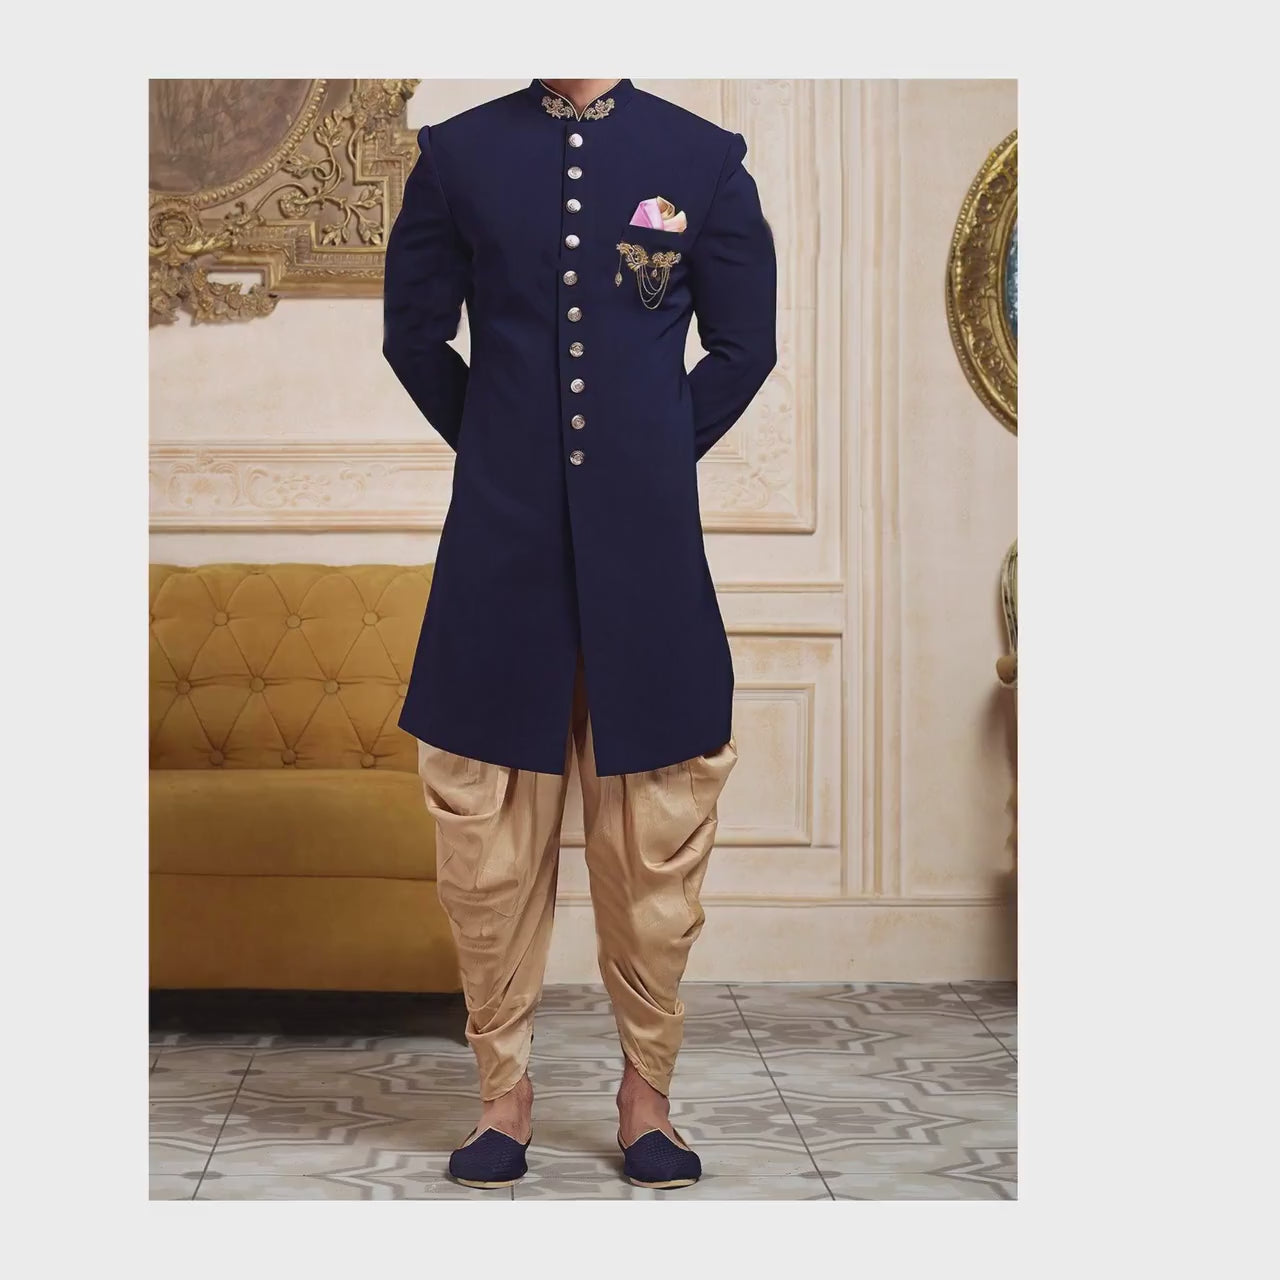 Mens wedding sherwani / Blue royal sherwani / Indian suit for men / indian sherwani / indian suit / sherwani for men for men /